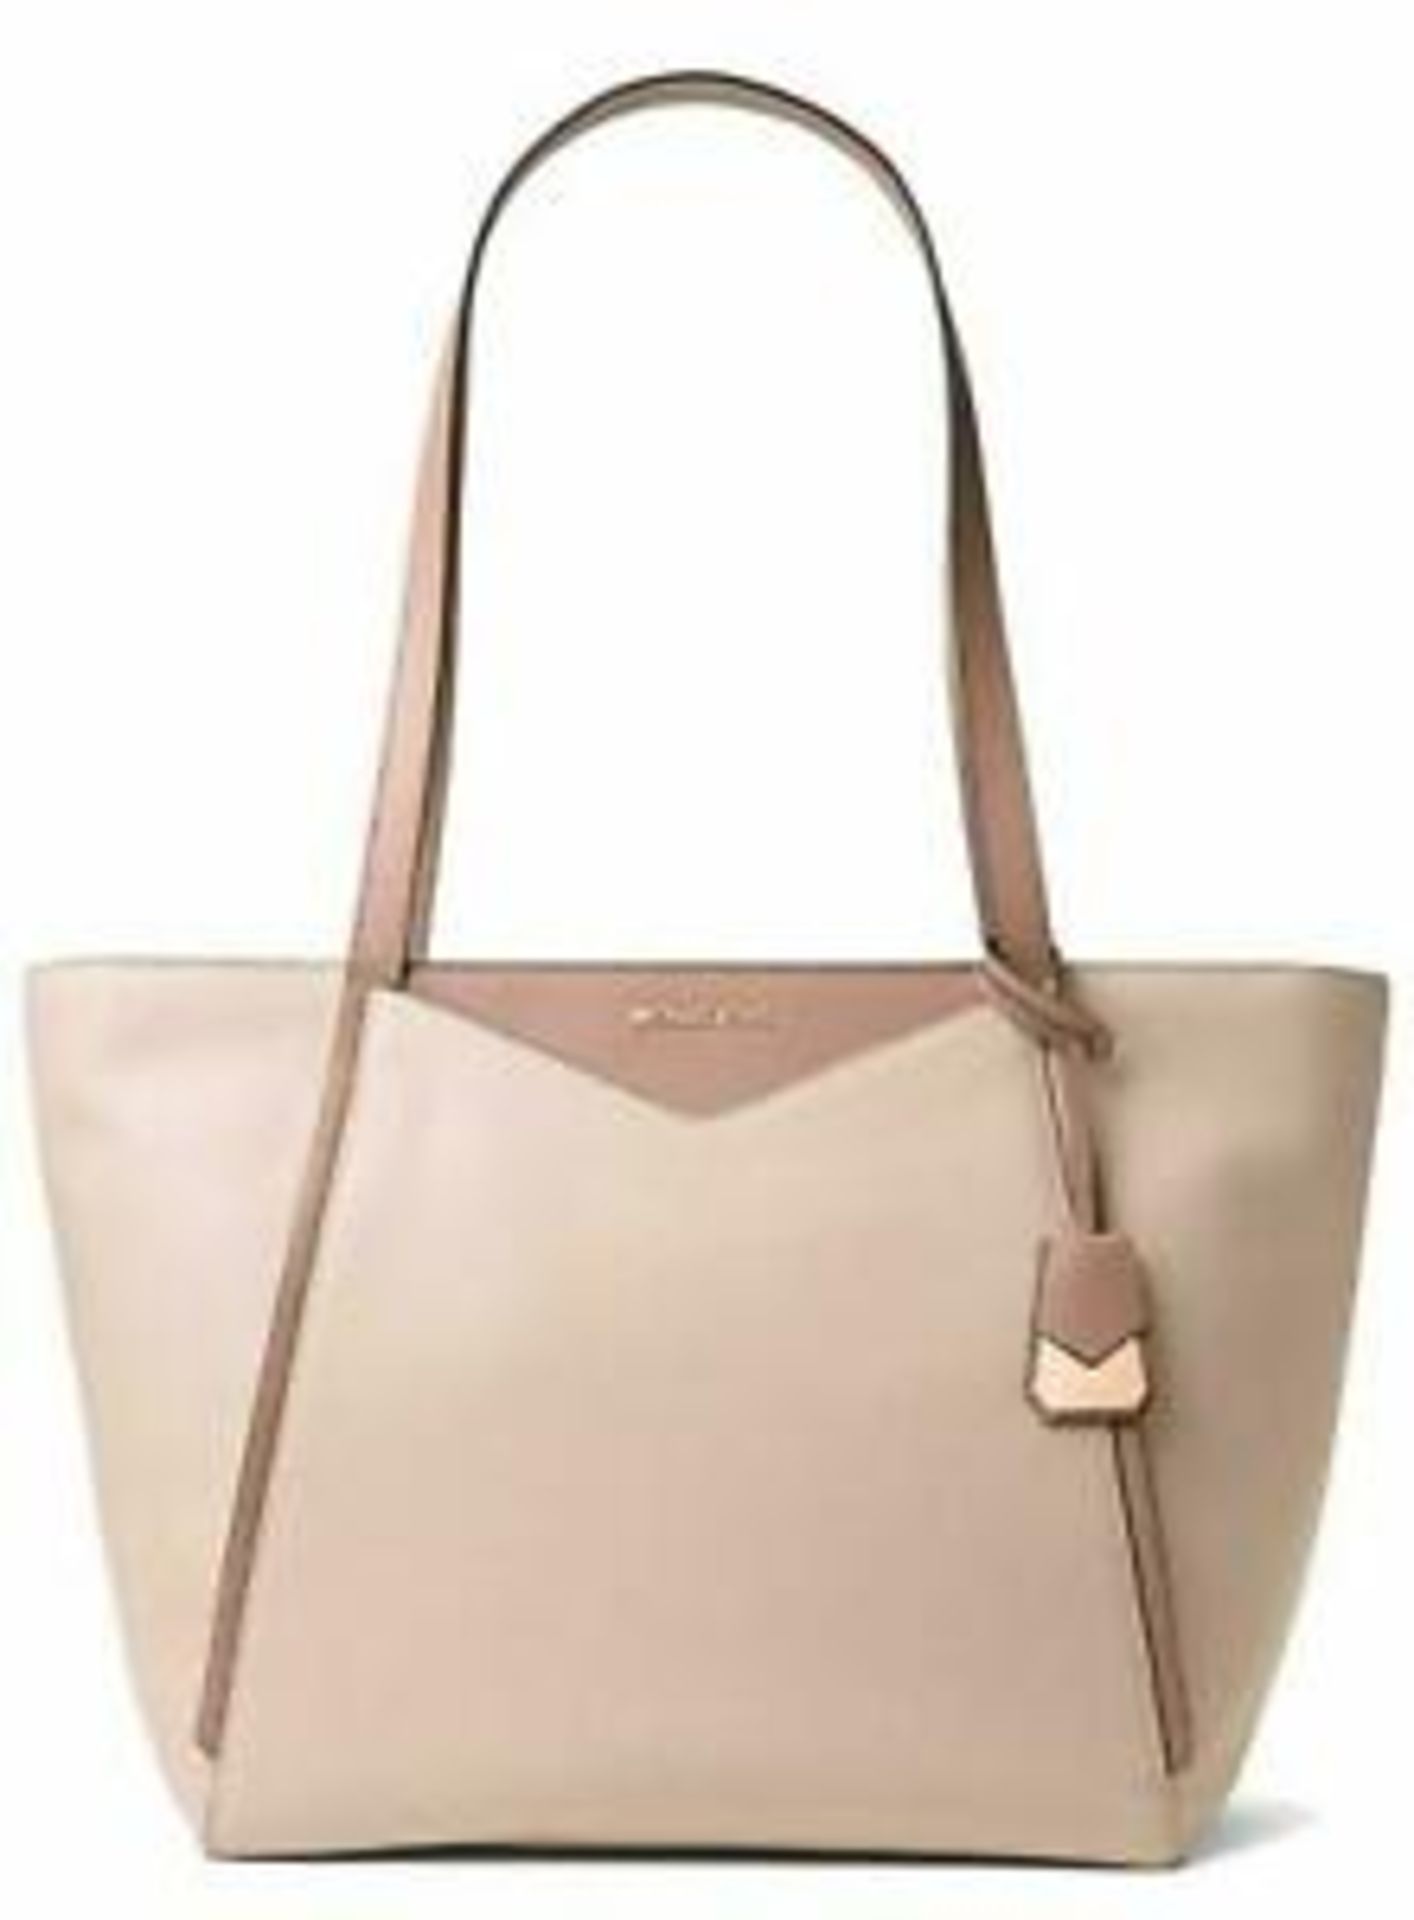 + VAT Brand New Ladies Michael Kors Whitney Soft Pink/Fawn Tote Bag (RRP £270 Michael Kors)